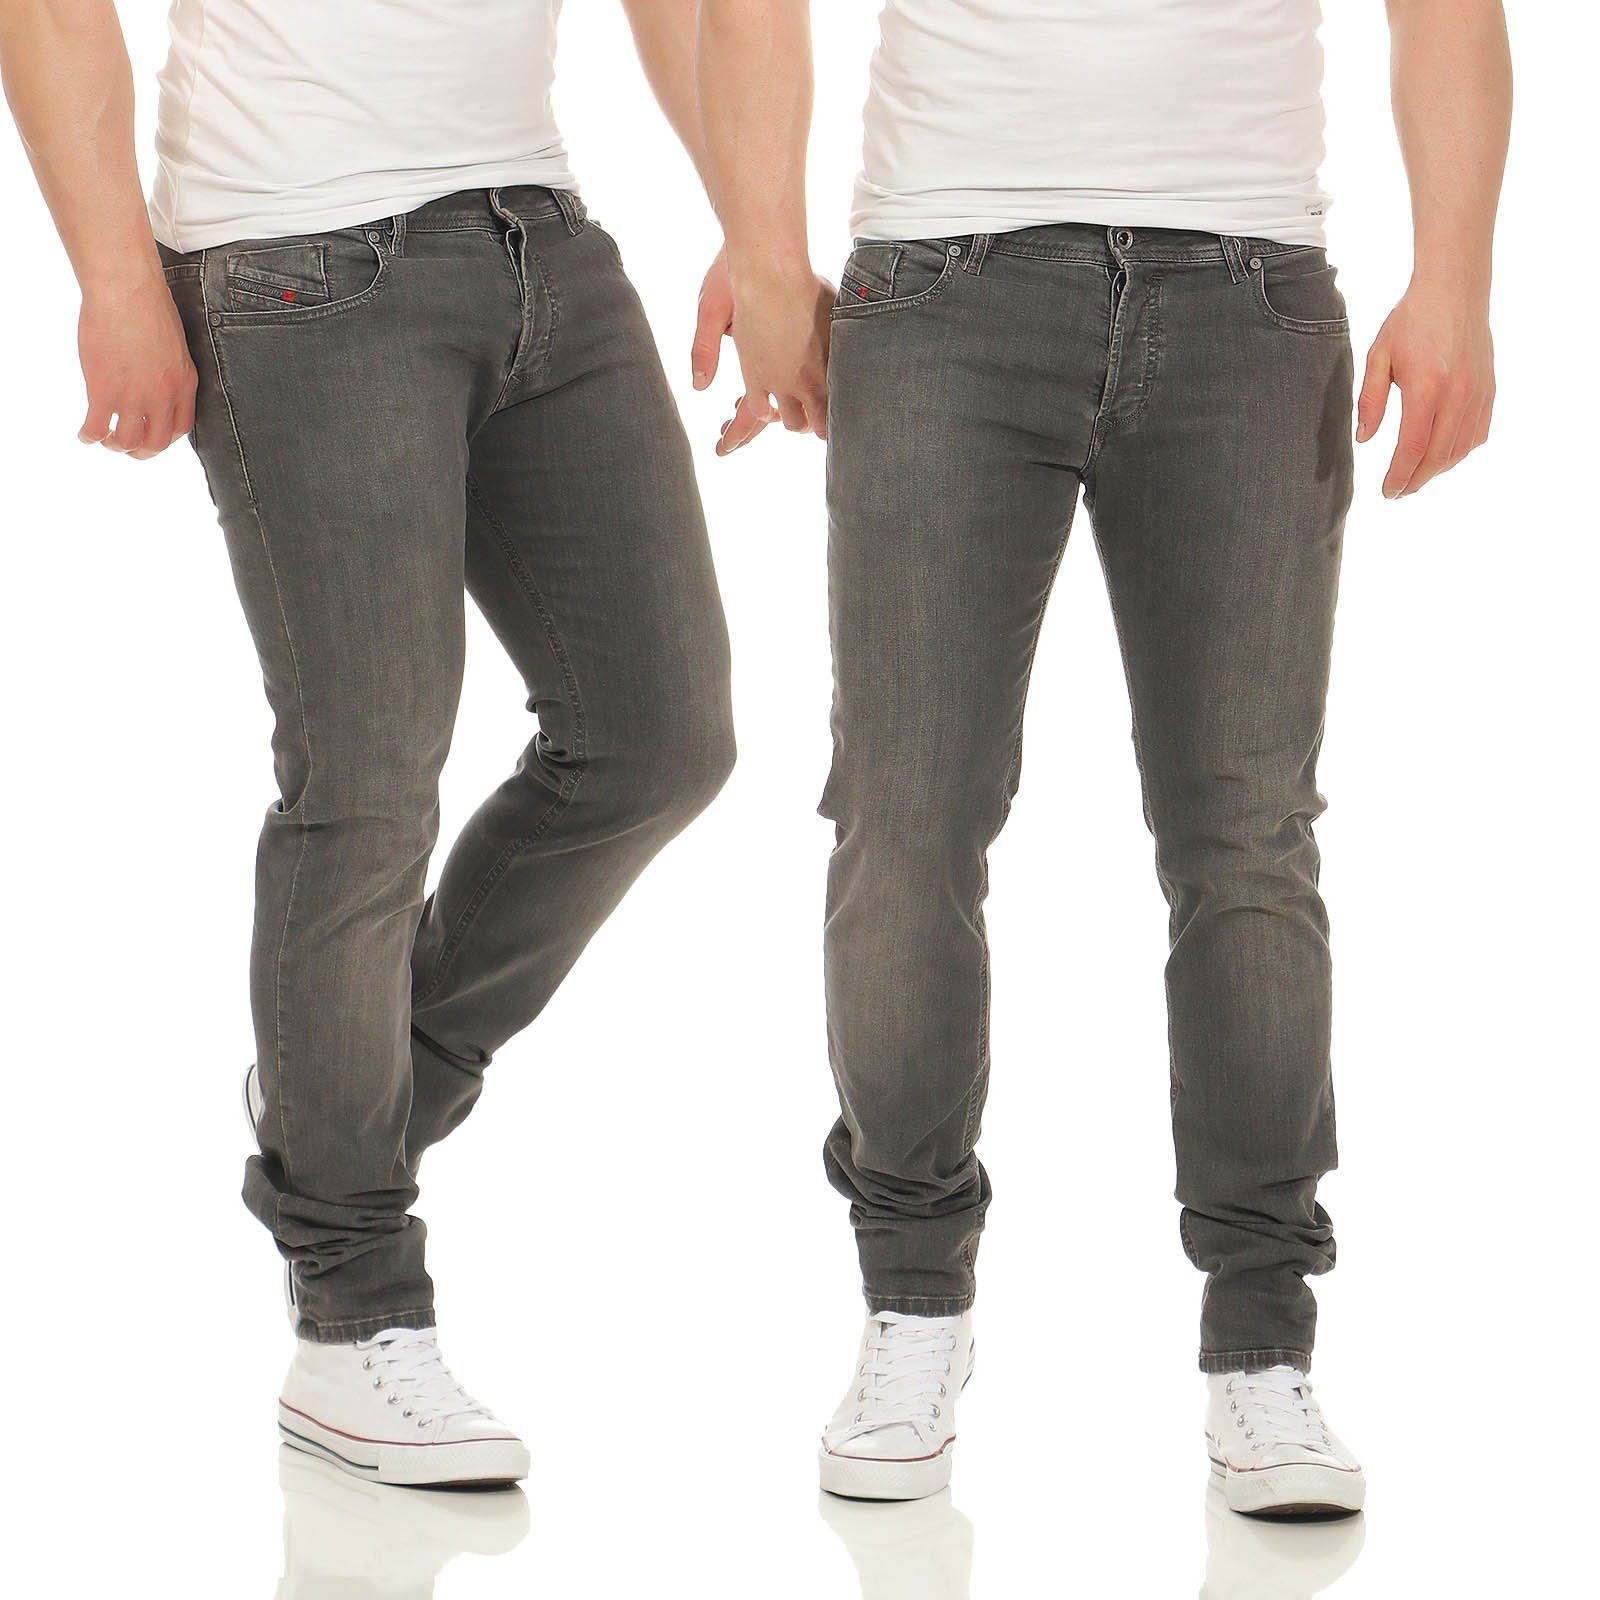 Diesel Stretch-Jeans Diesel Herren Stretch-Jeans - SLEENKER 0678Z Made in Italy, 5 Pocket Style, Dezenter Used-Look, Länge: inch 32